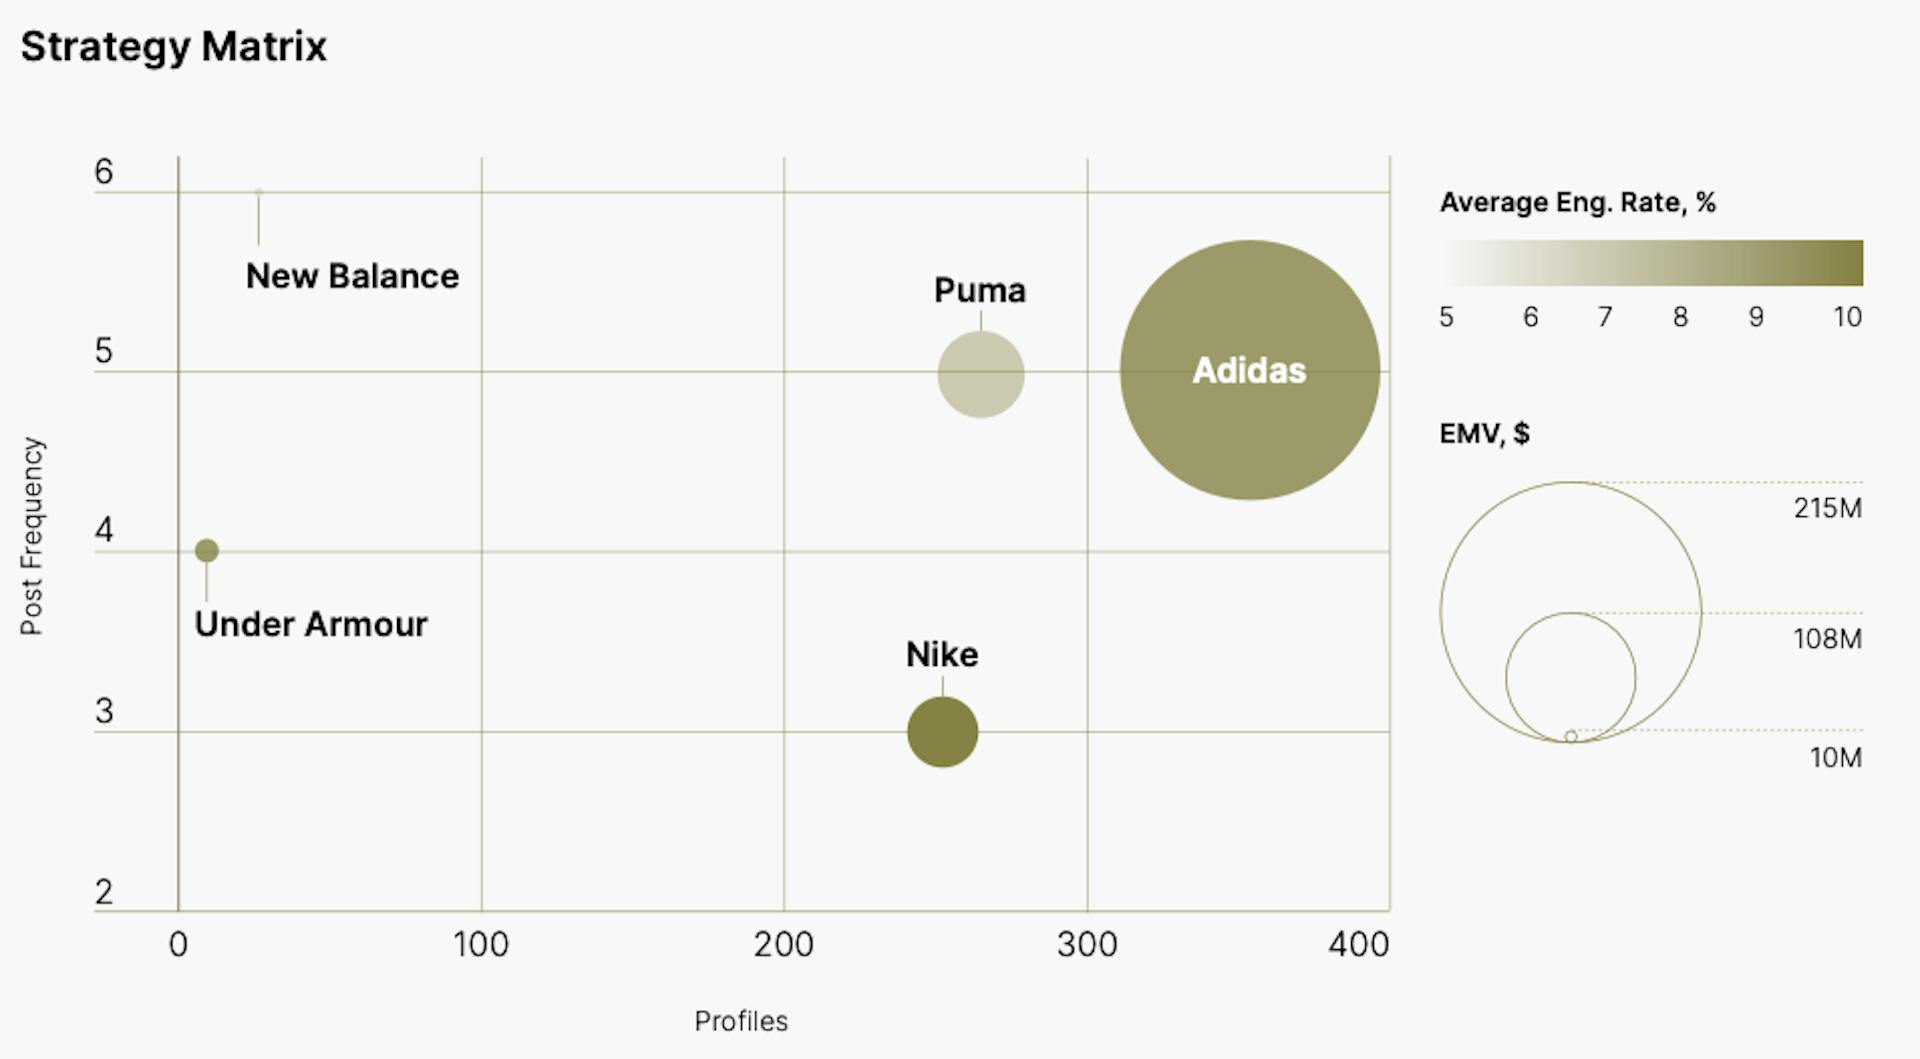 Strategy matrix comparing sports brands. 